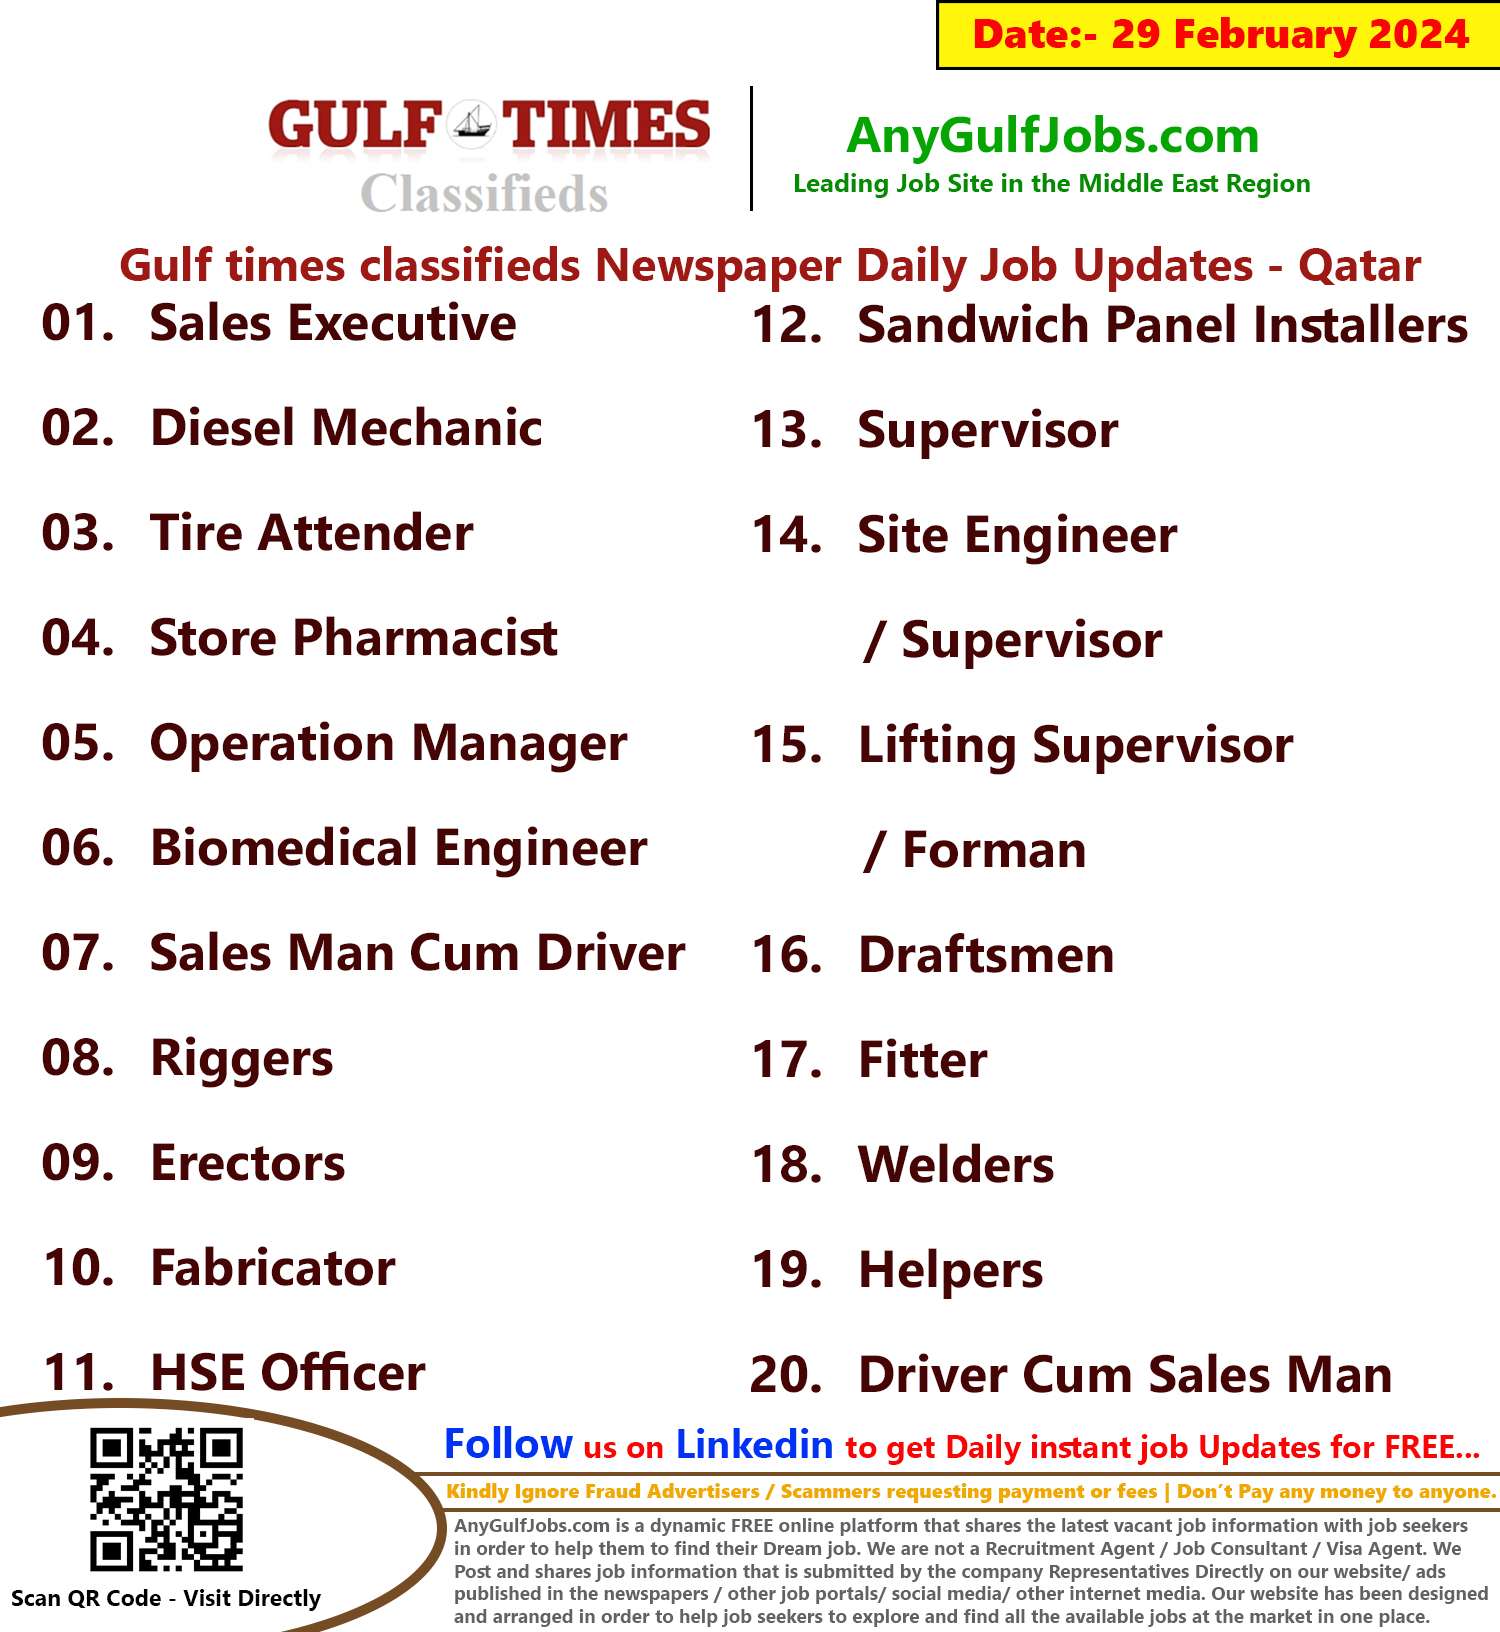 Gulf Times Classifieds Job Vacancies Qatar - 29 February 2024